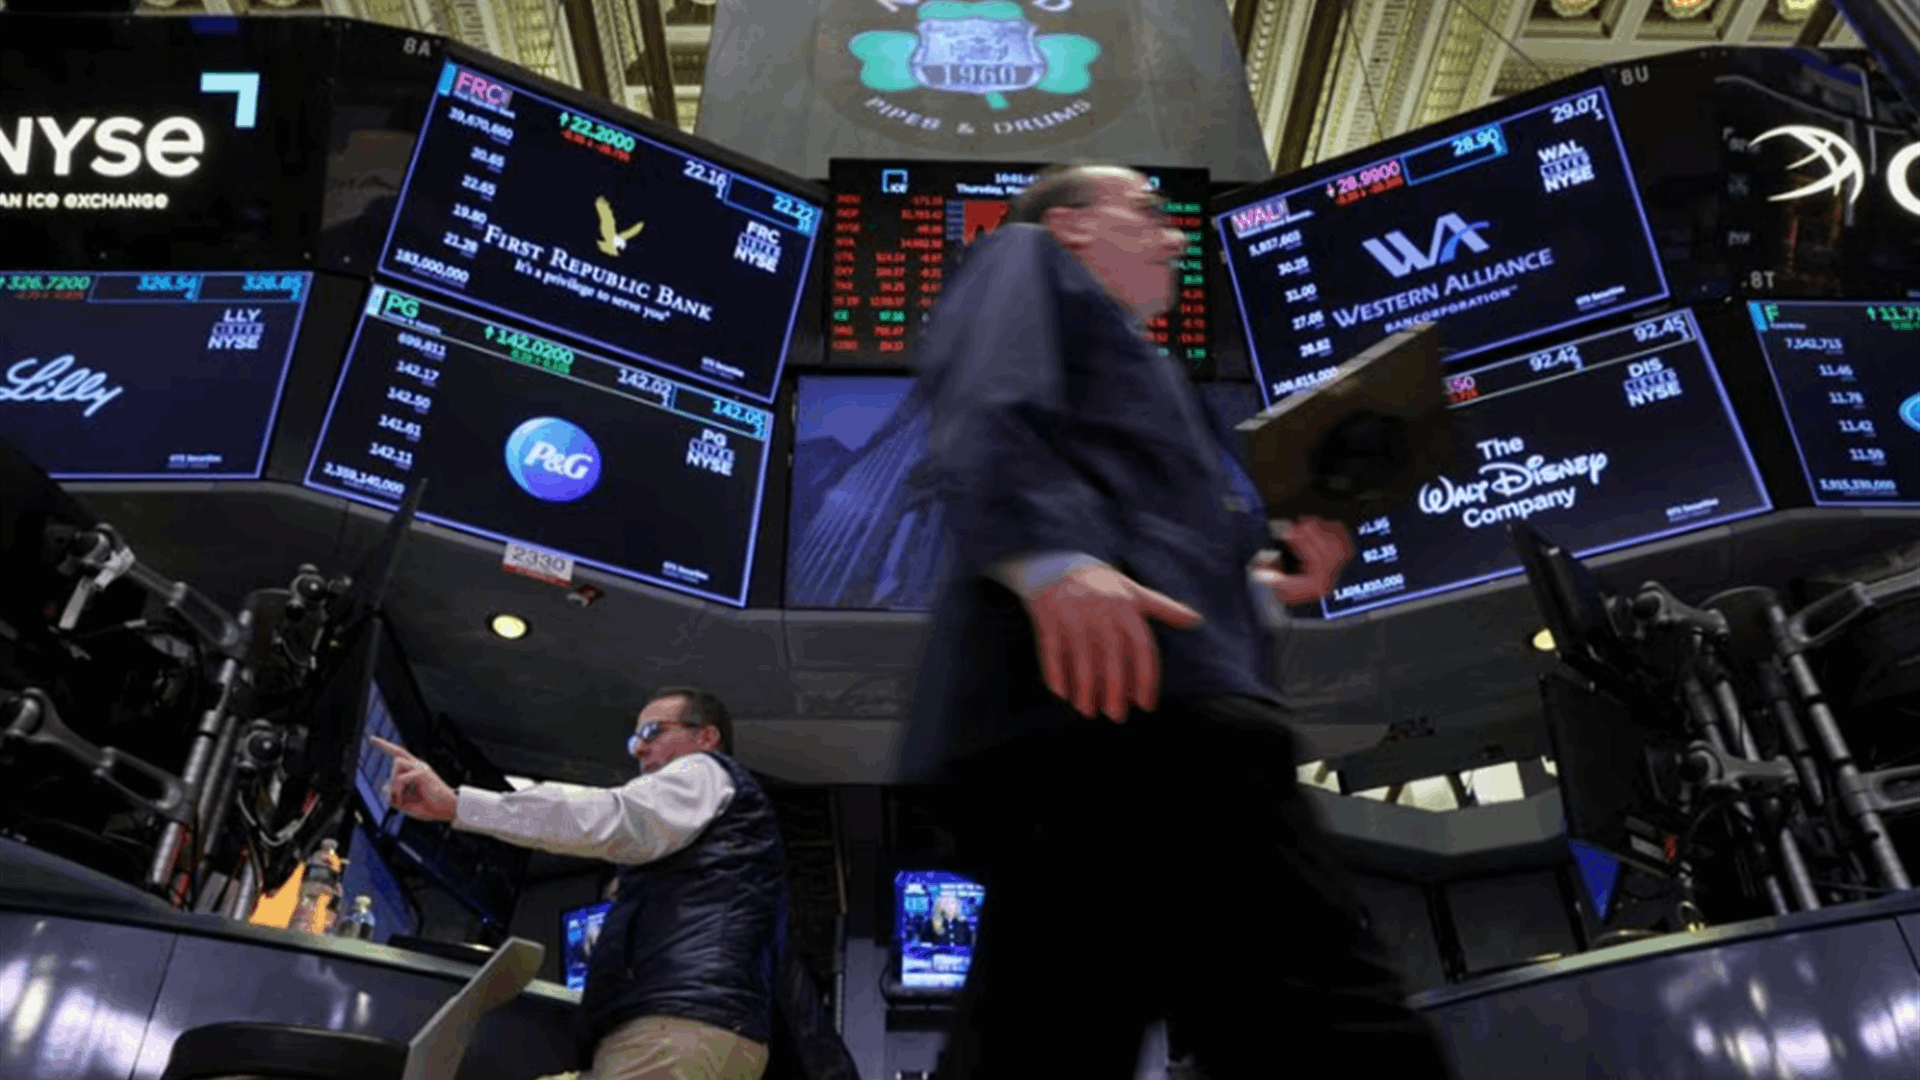 Wall Street falls on banking crisis worries